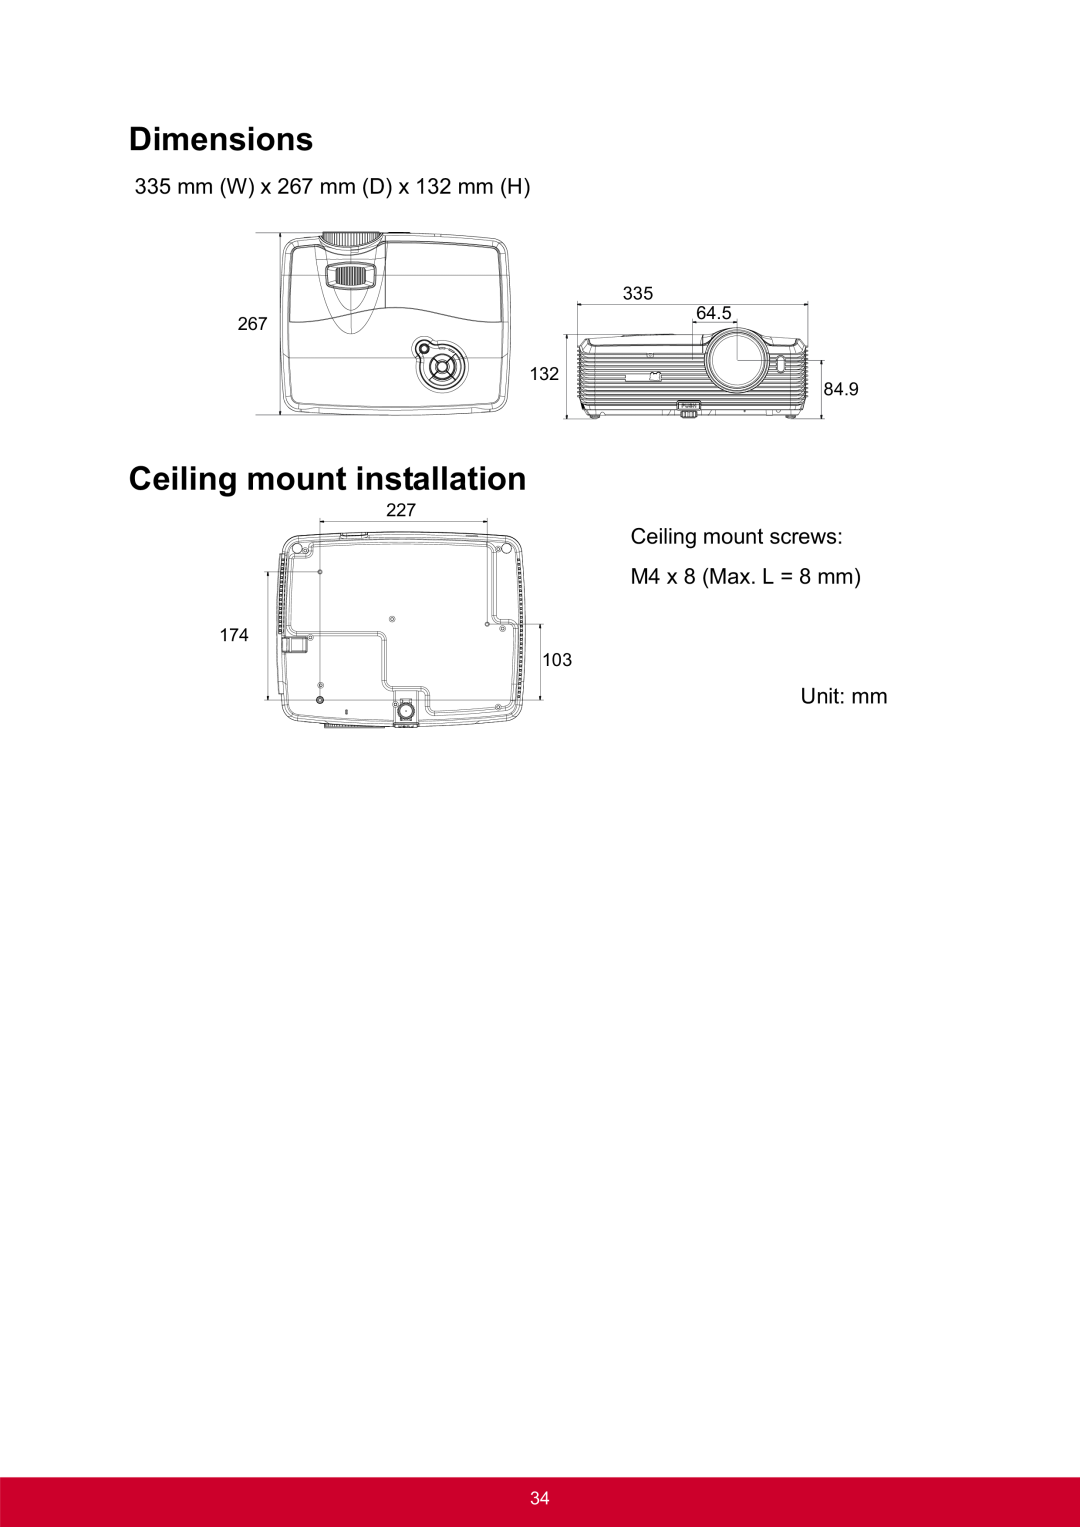 ViewSonic PRO8300 warranty Dimensions, Ceiling mount installation, mm W x 267 mm D x 132 mm H, Unit mm 